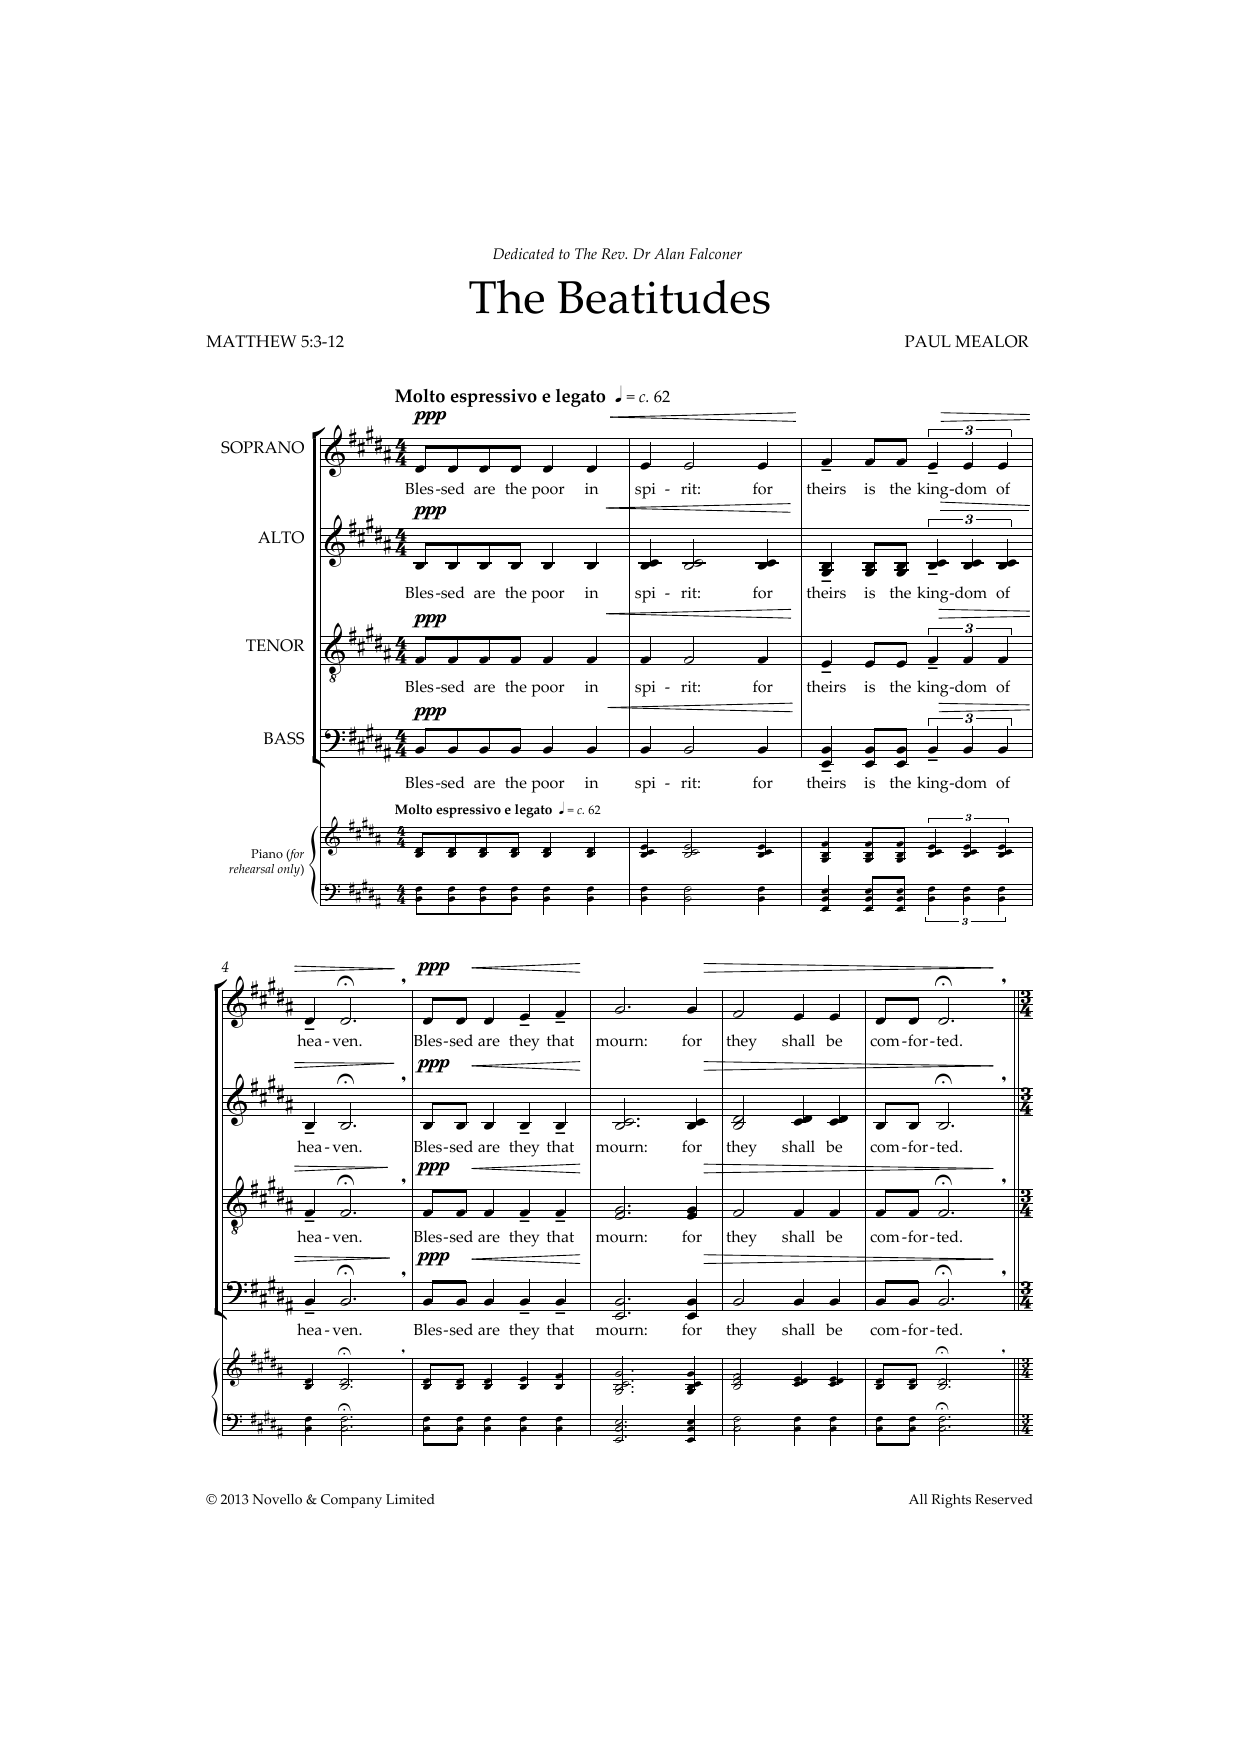 Download Paul Mealor The Beatitudes Sheet Music